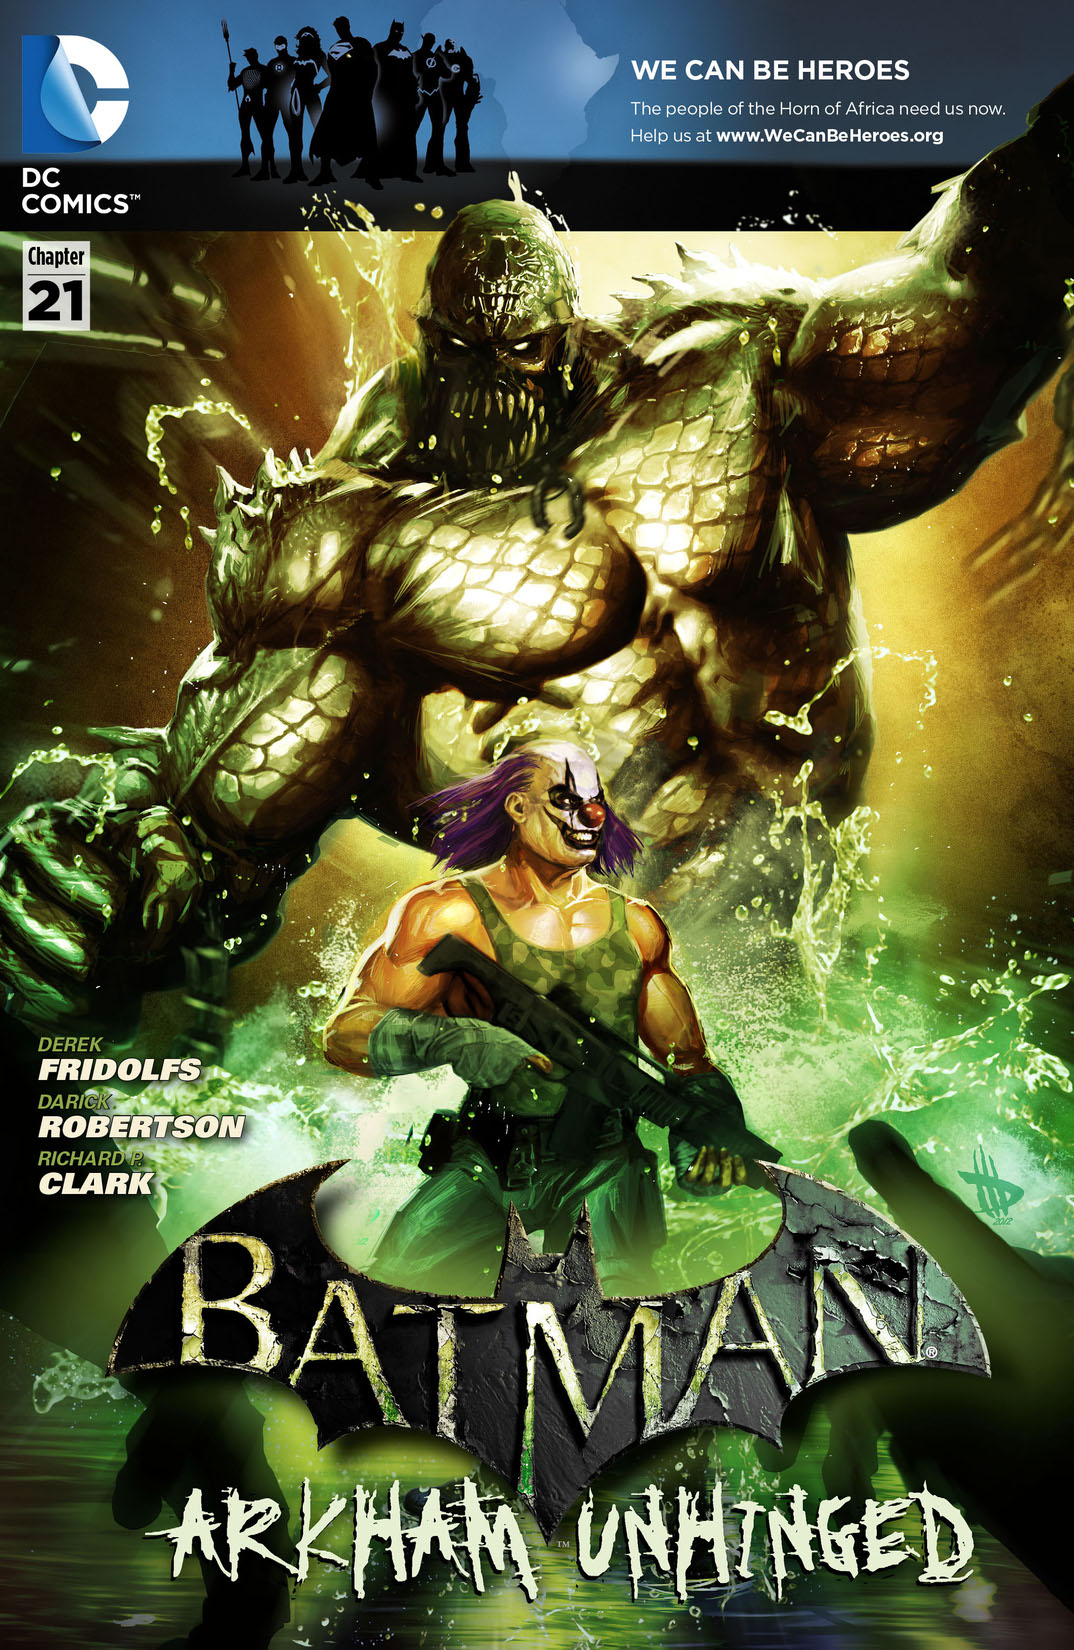 Batman: Arkham Unhinged #21 preview images